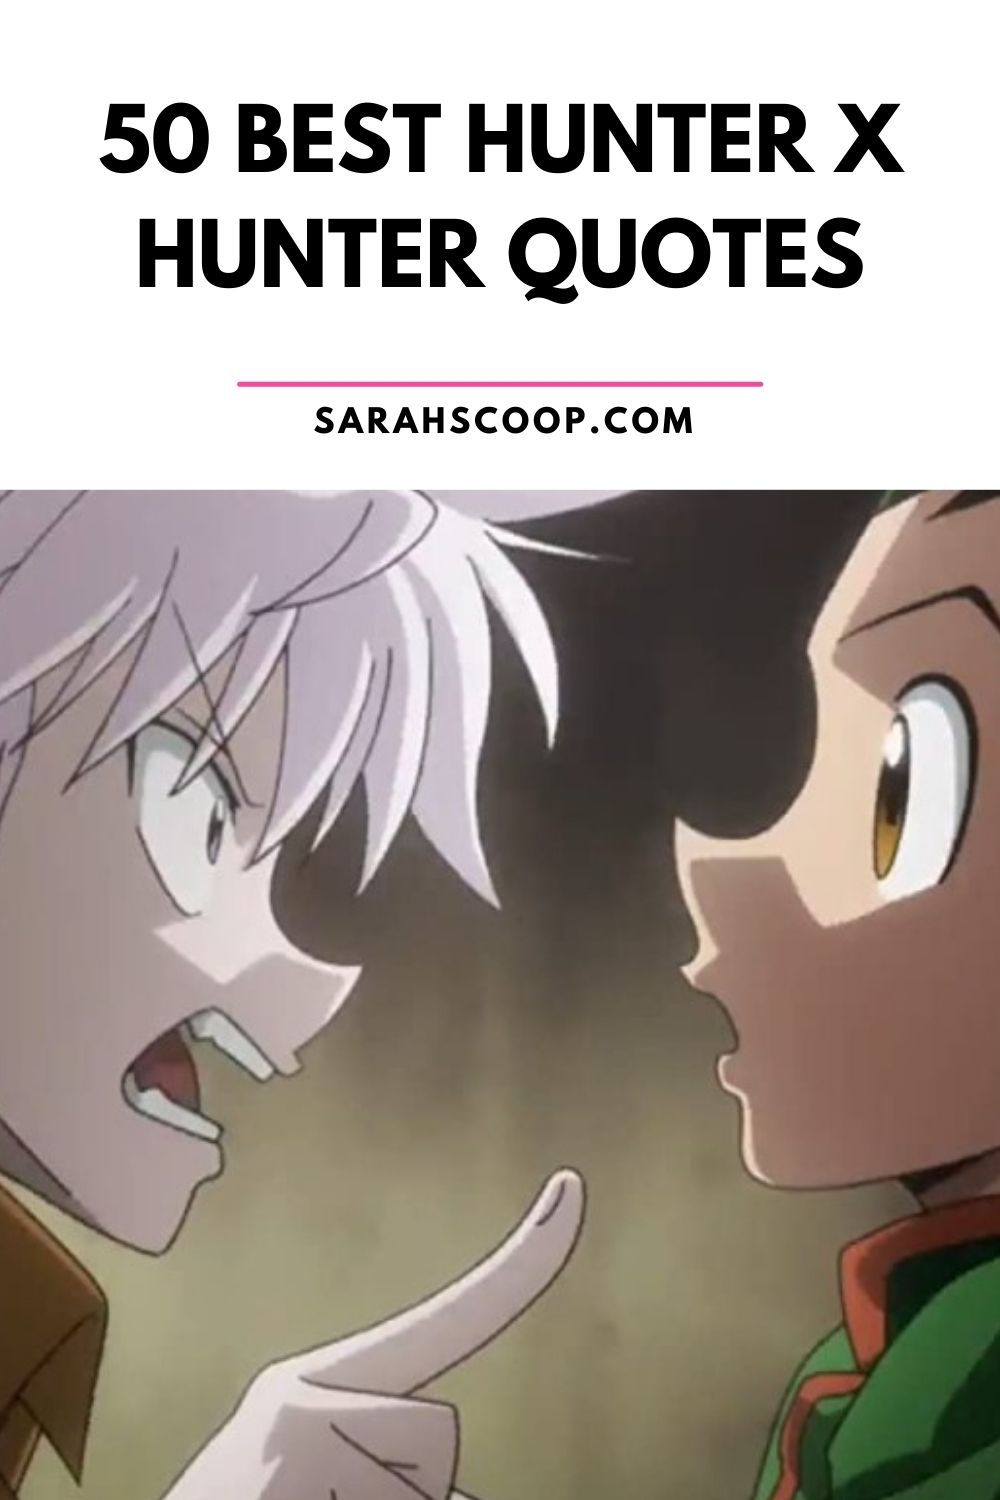 50 Best Hunter x Hunter Quotes - Sarah Scoop